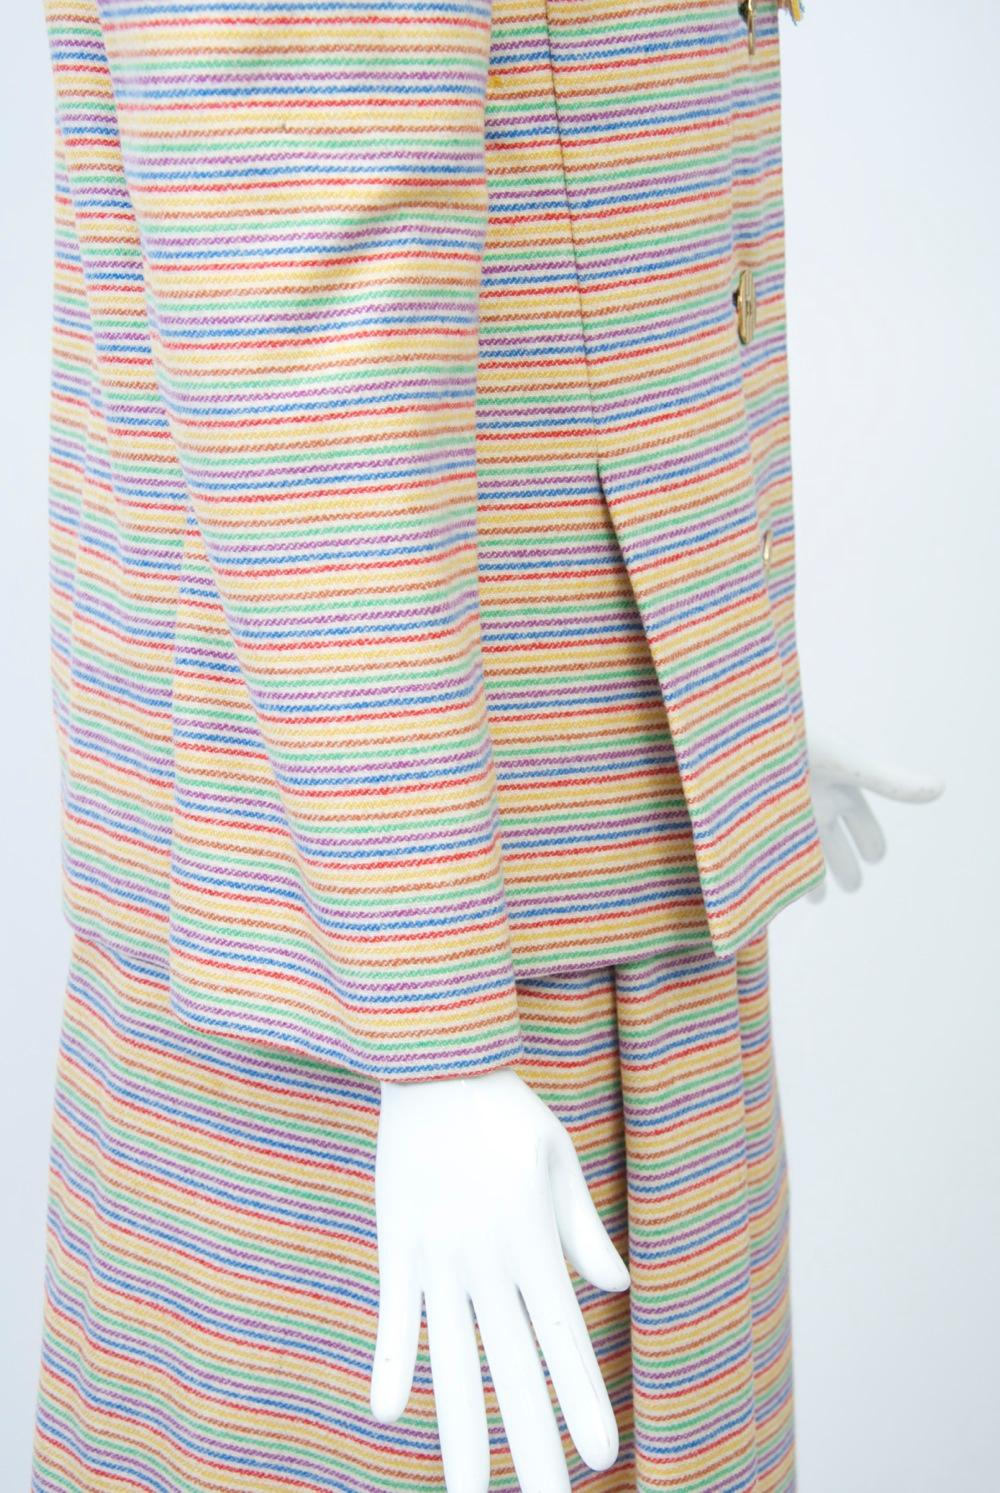 Pauline Trigère Striped Wool Suit 1